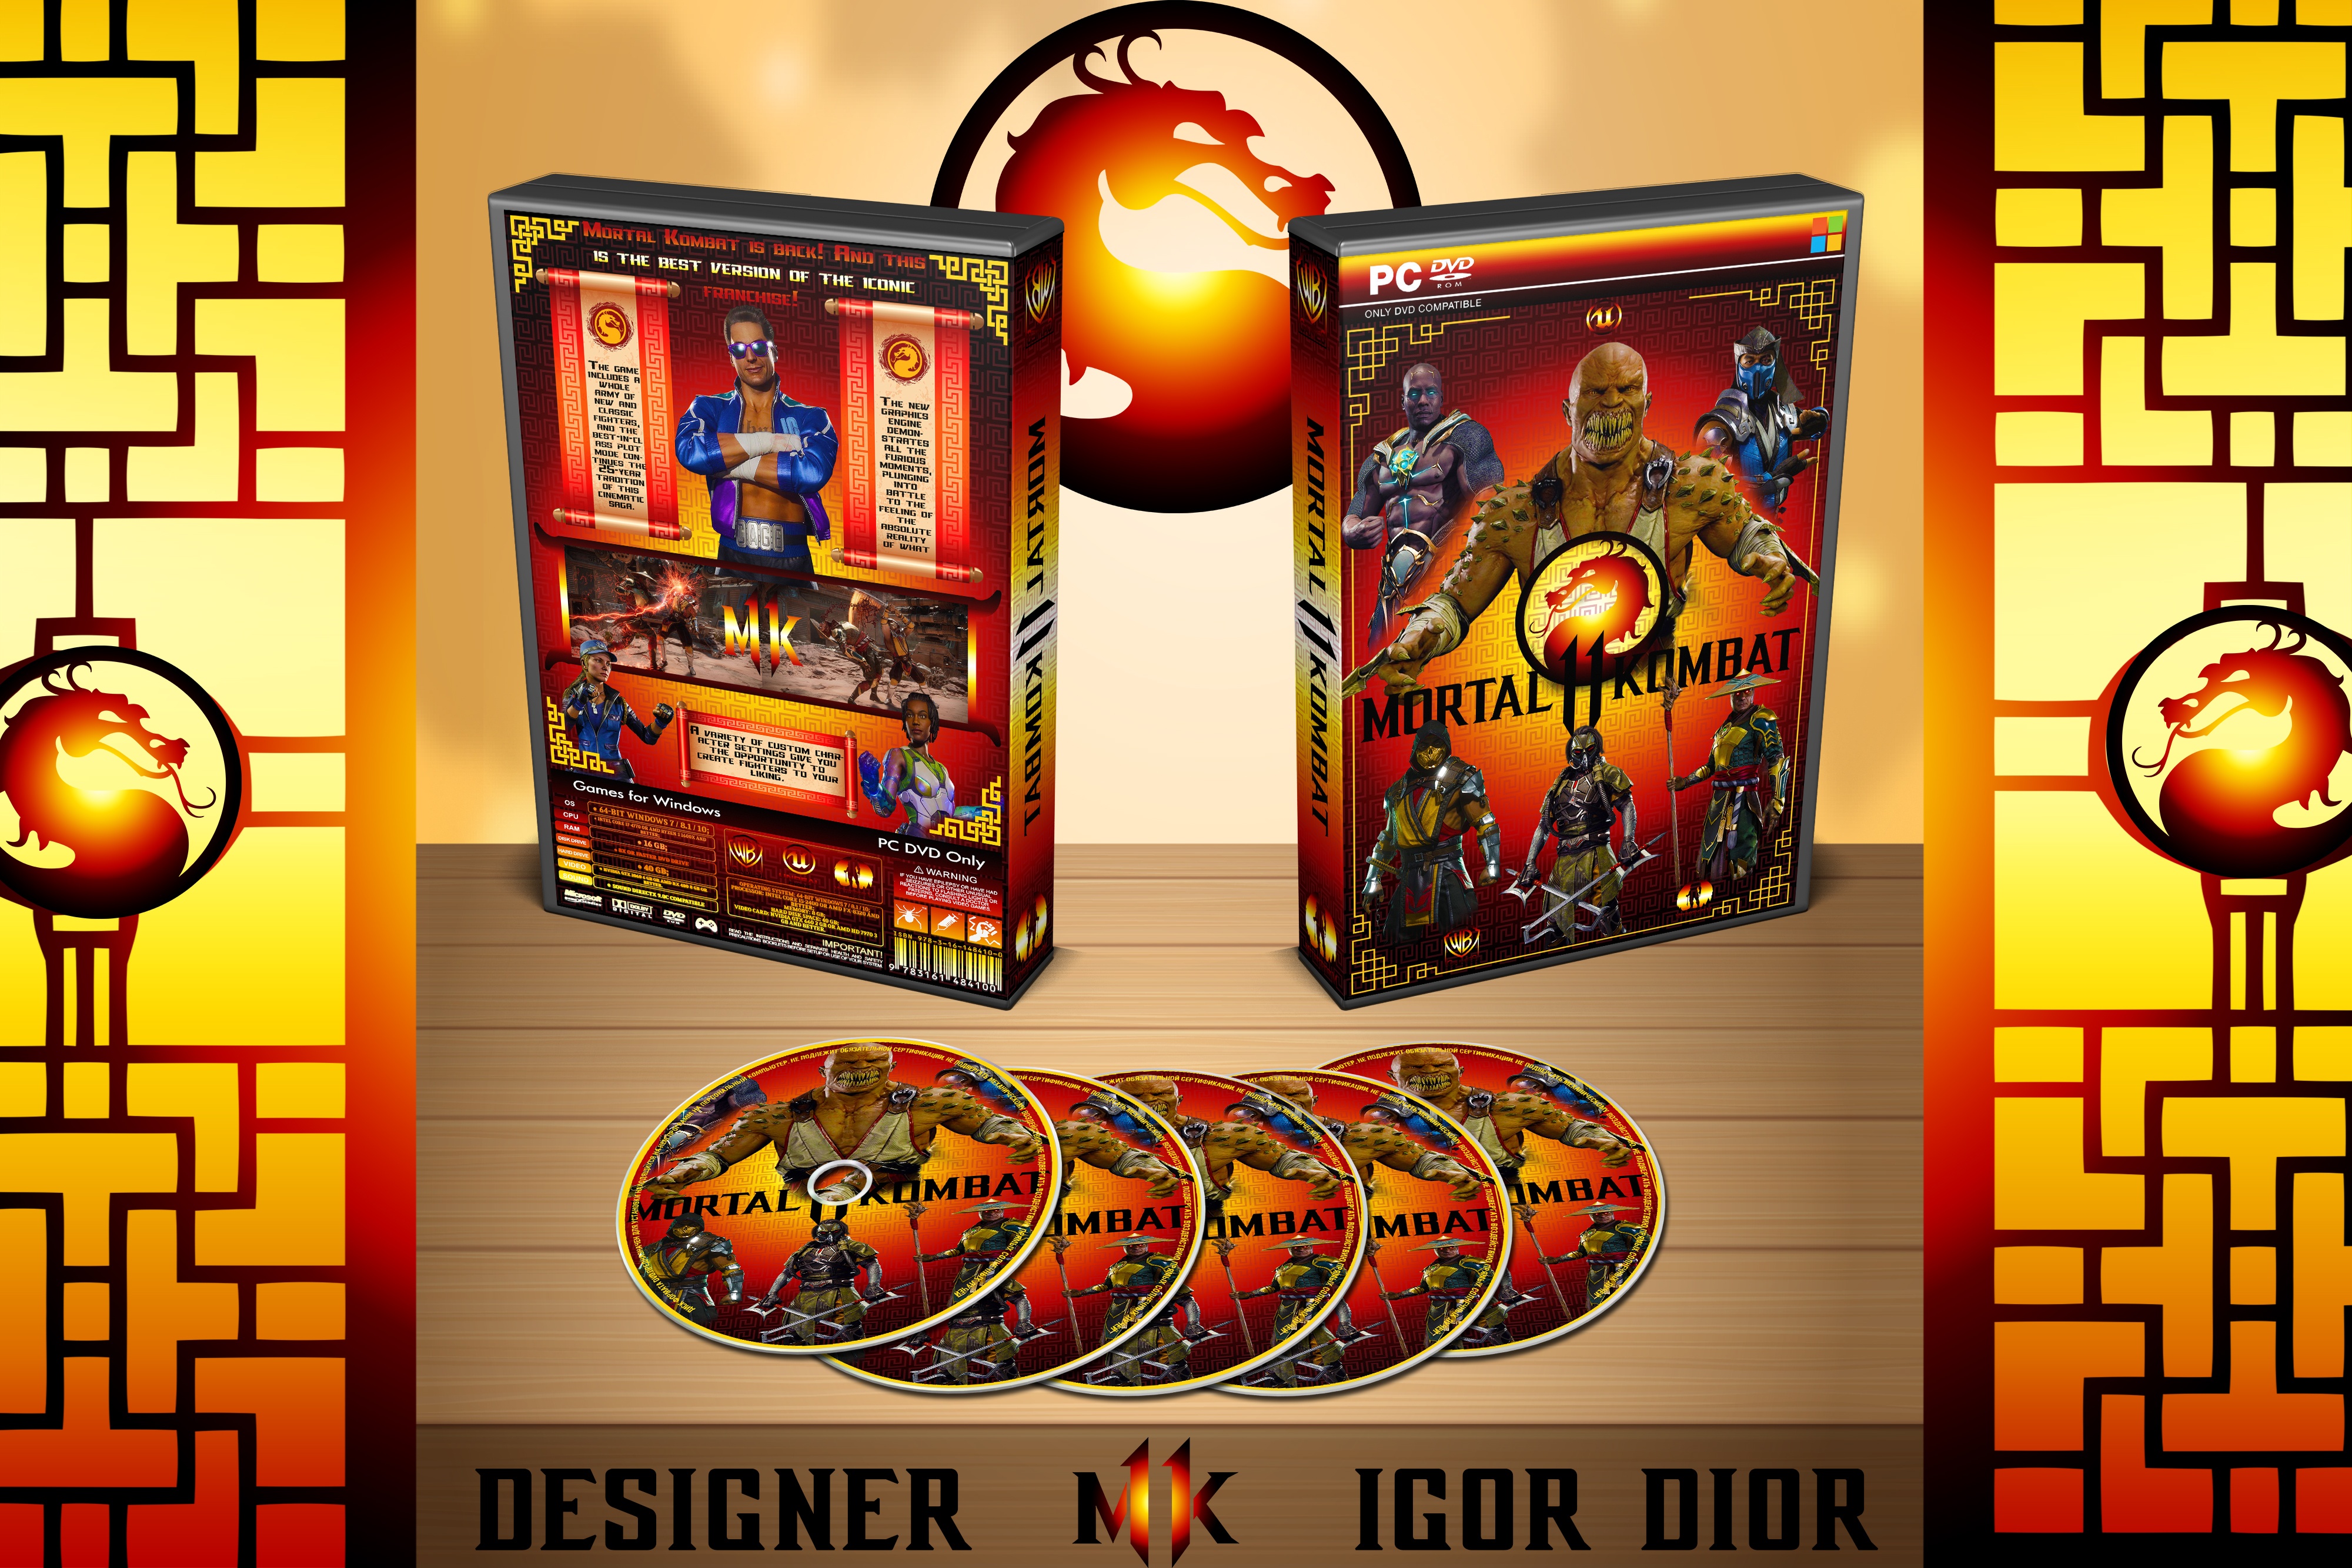 Mortal Kombat 11 box cover